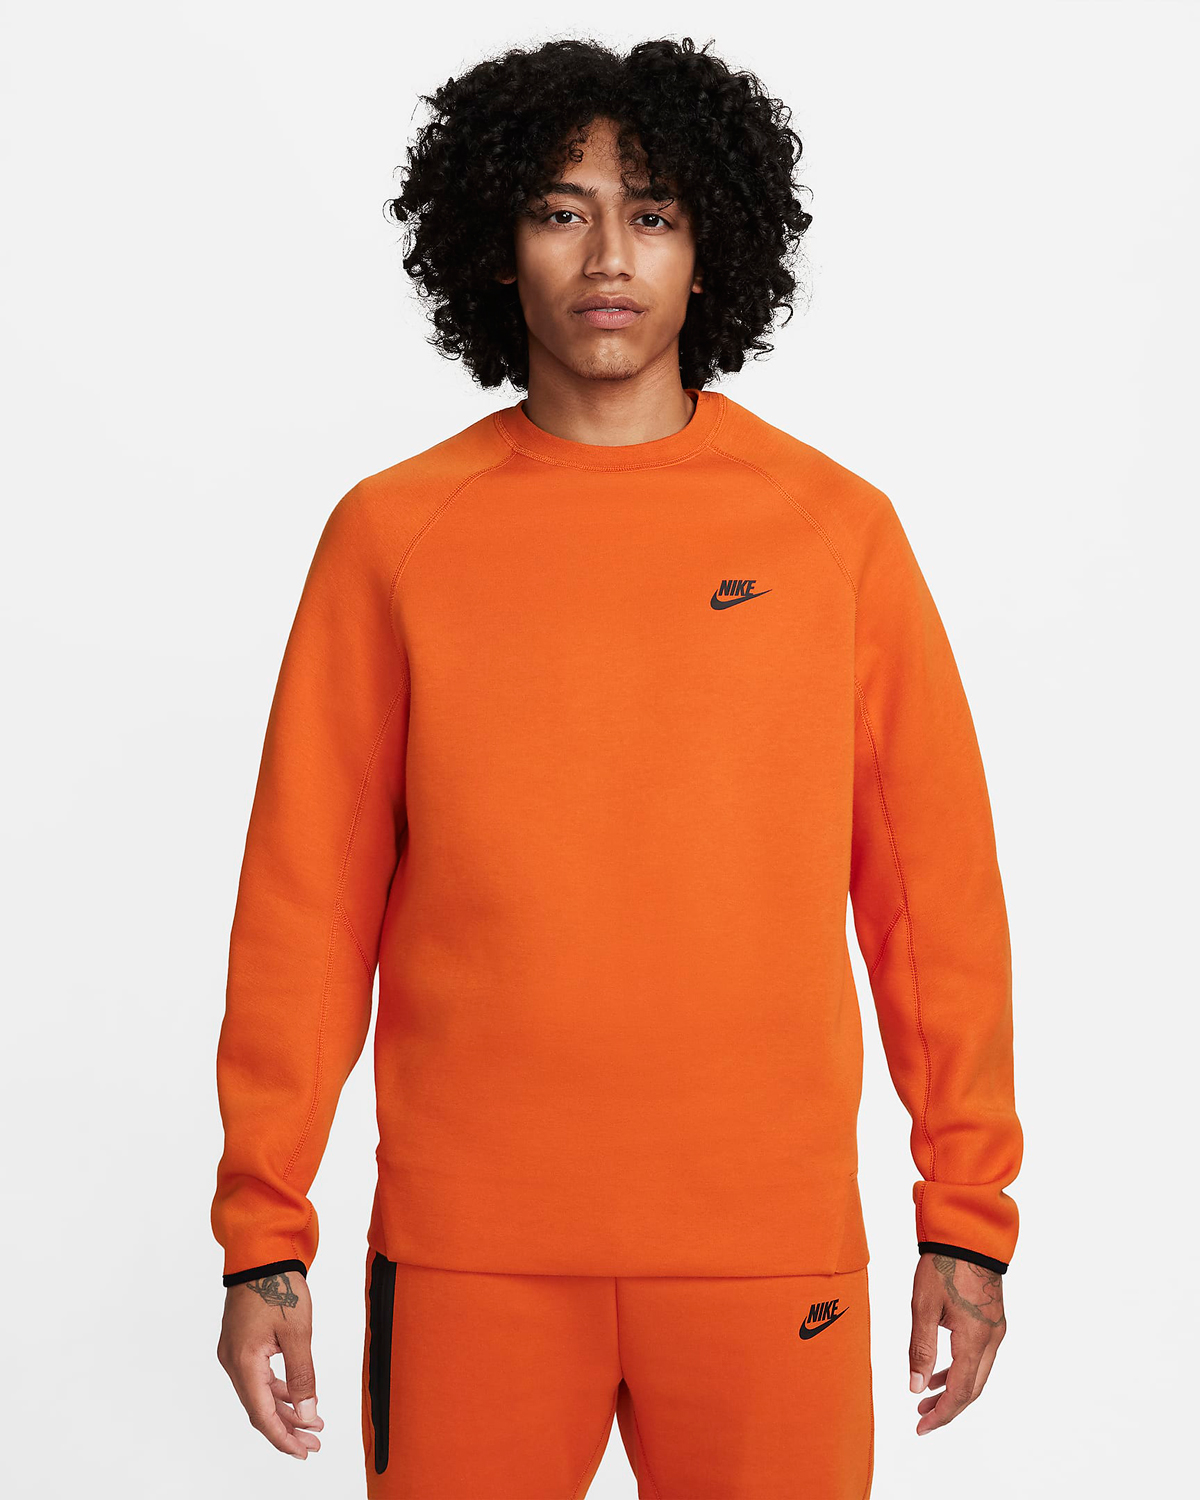 Nike-Tech-Fleece-Crew-Sweatshirt-Campfire-Orange